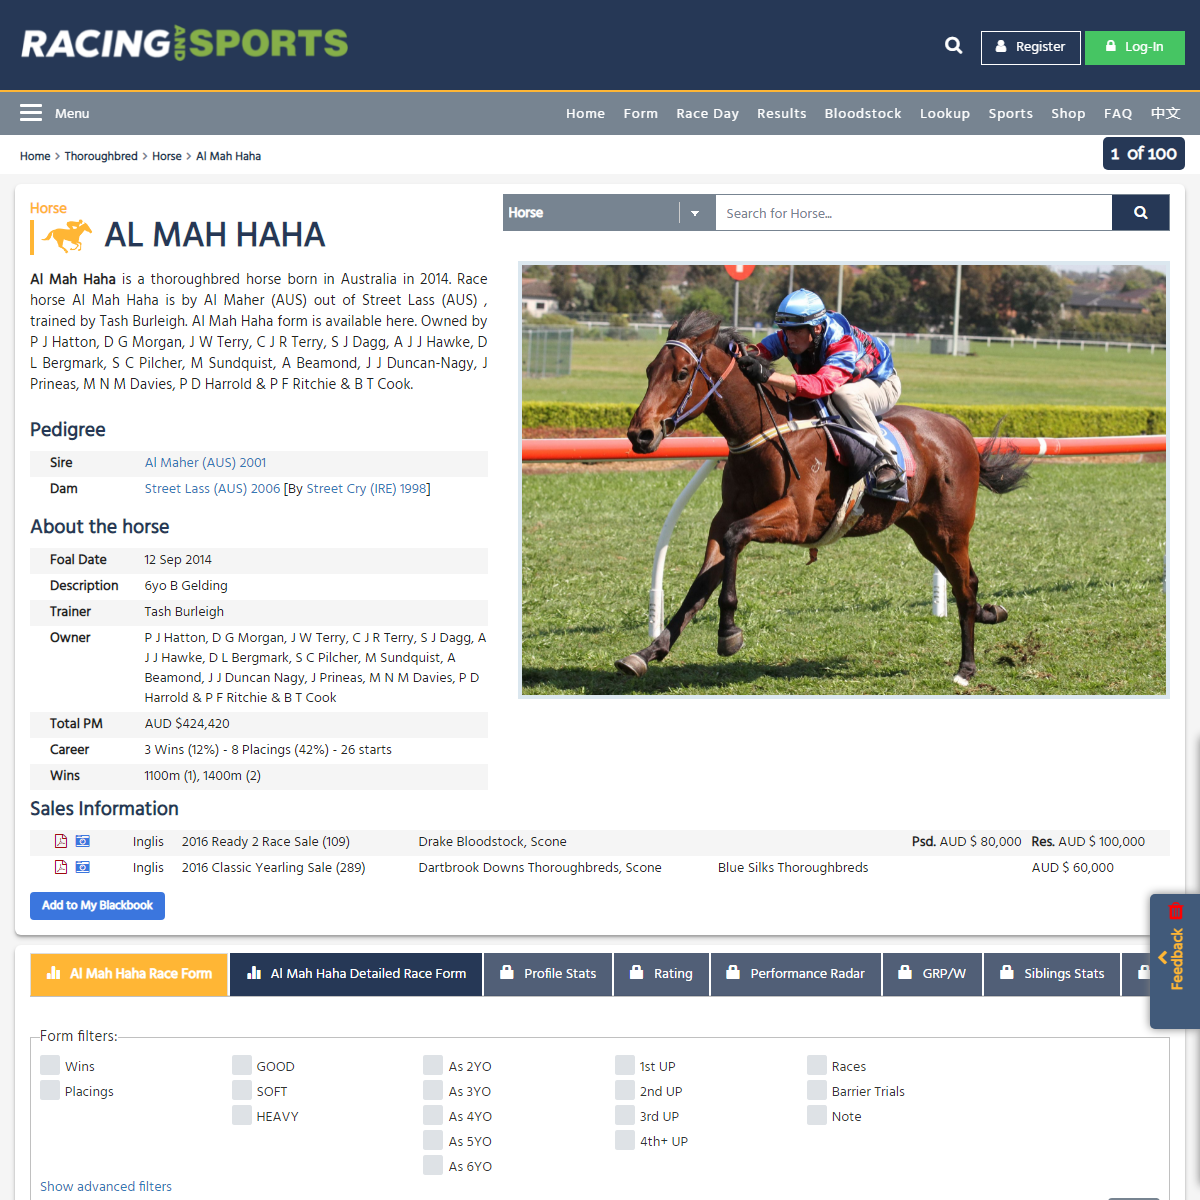 A complete backup of https://www.racingandsports.com/thoroughbreds/horse/al-mah-haha/1124654